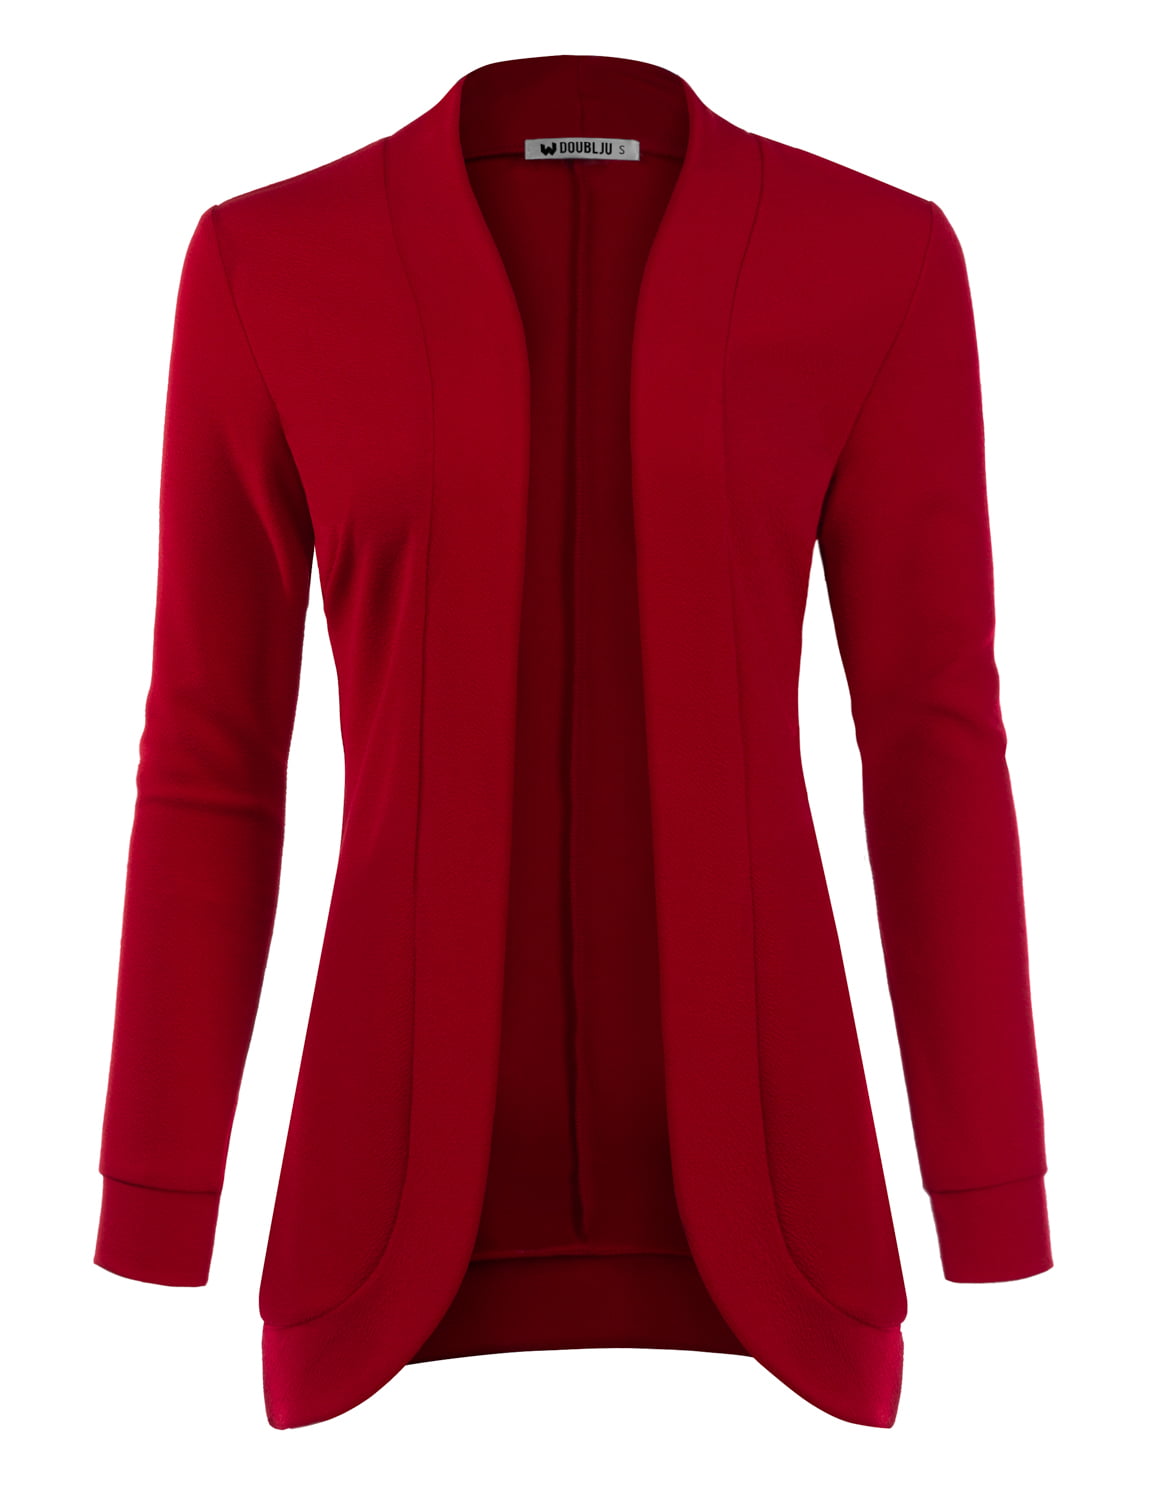 TIFENNY Womens Plus Size Coat Casual Long Sleeve Waterfall Asymmetric Drape Open Long Maxi Cardigan 